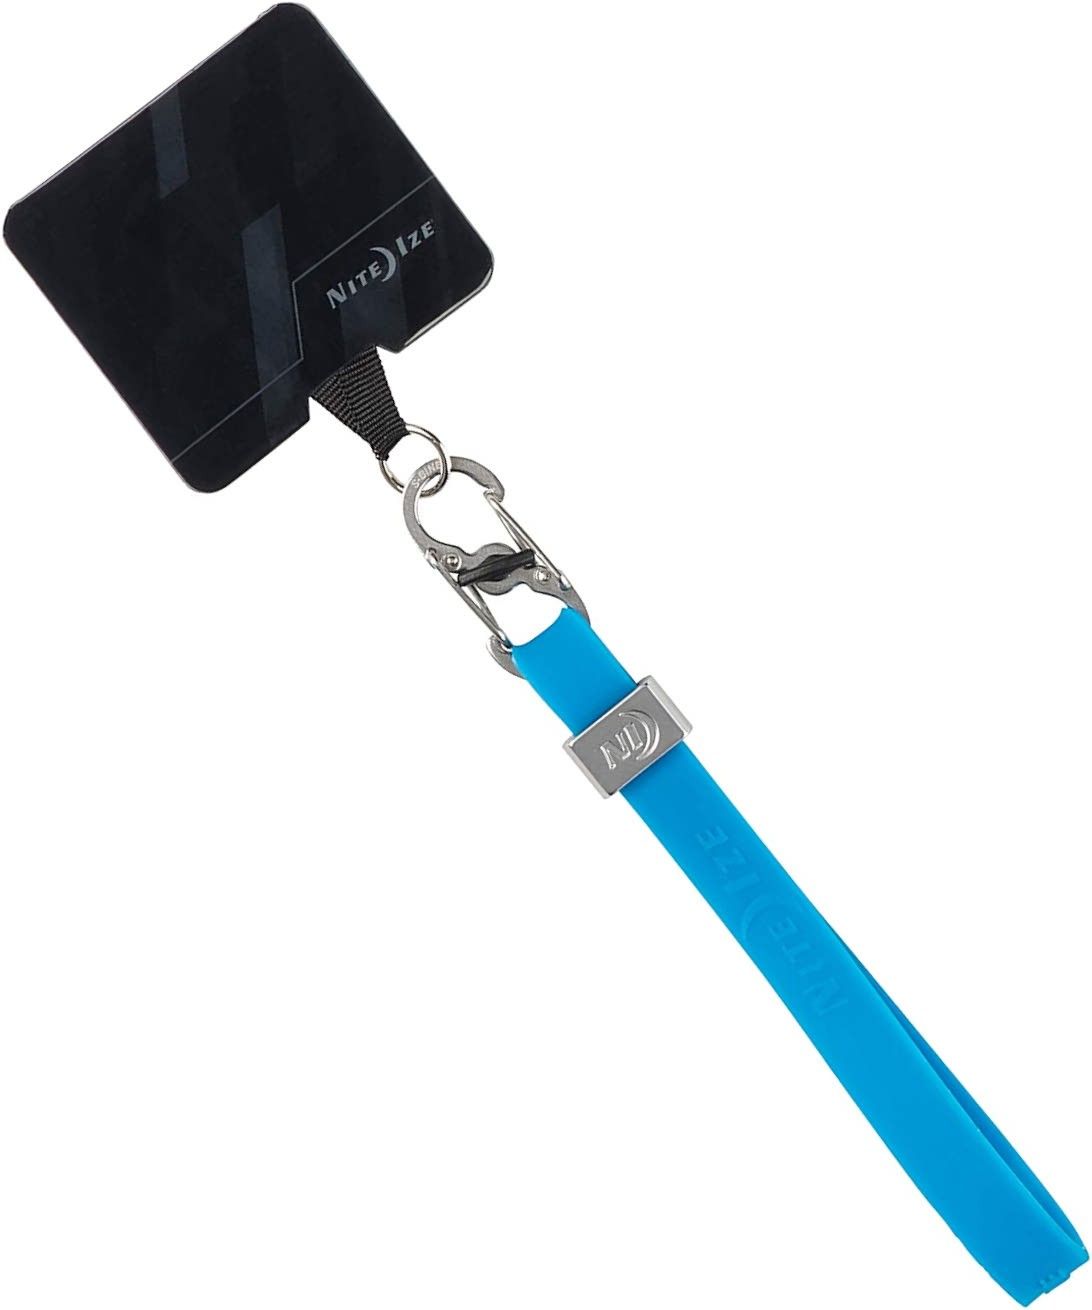 Крепление для телефона с карабином Nite Ize Hitch Phone Anchor + Stretch Strap HPSS-03-R7, синий - фото